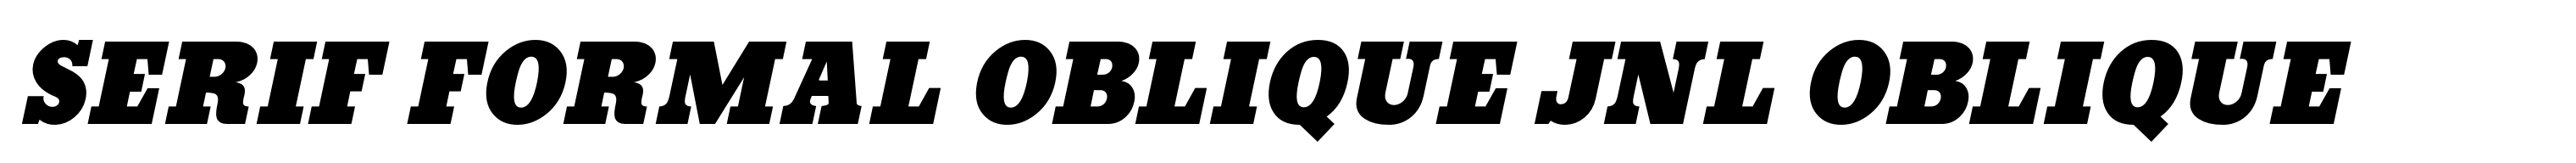 Serif Formal Oblique JNL Oblique